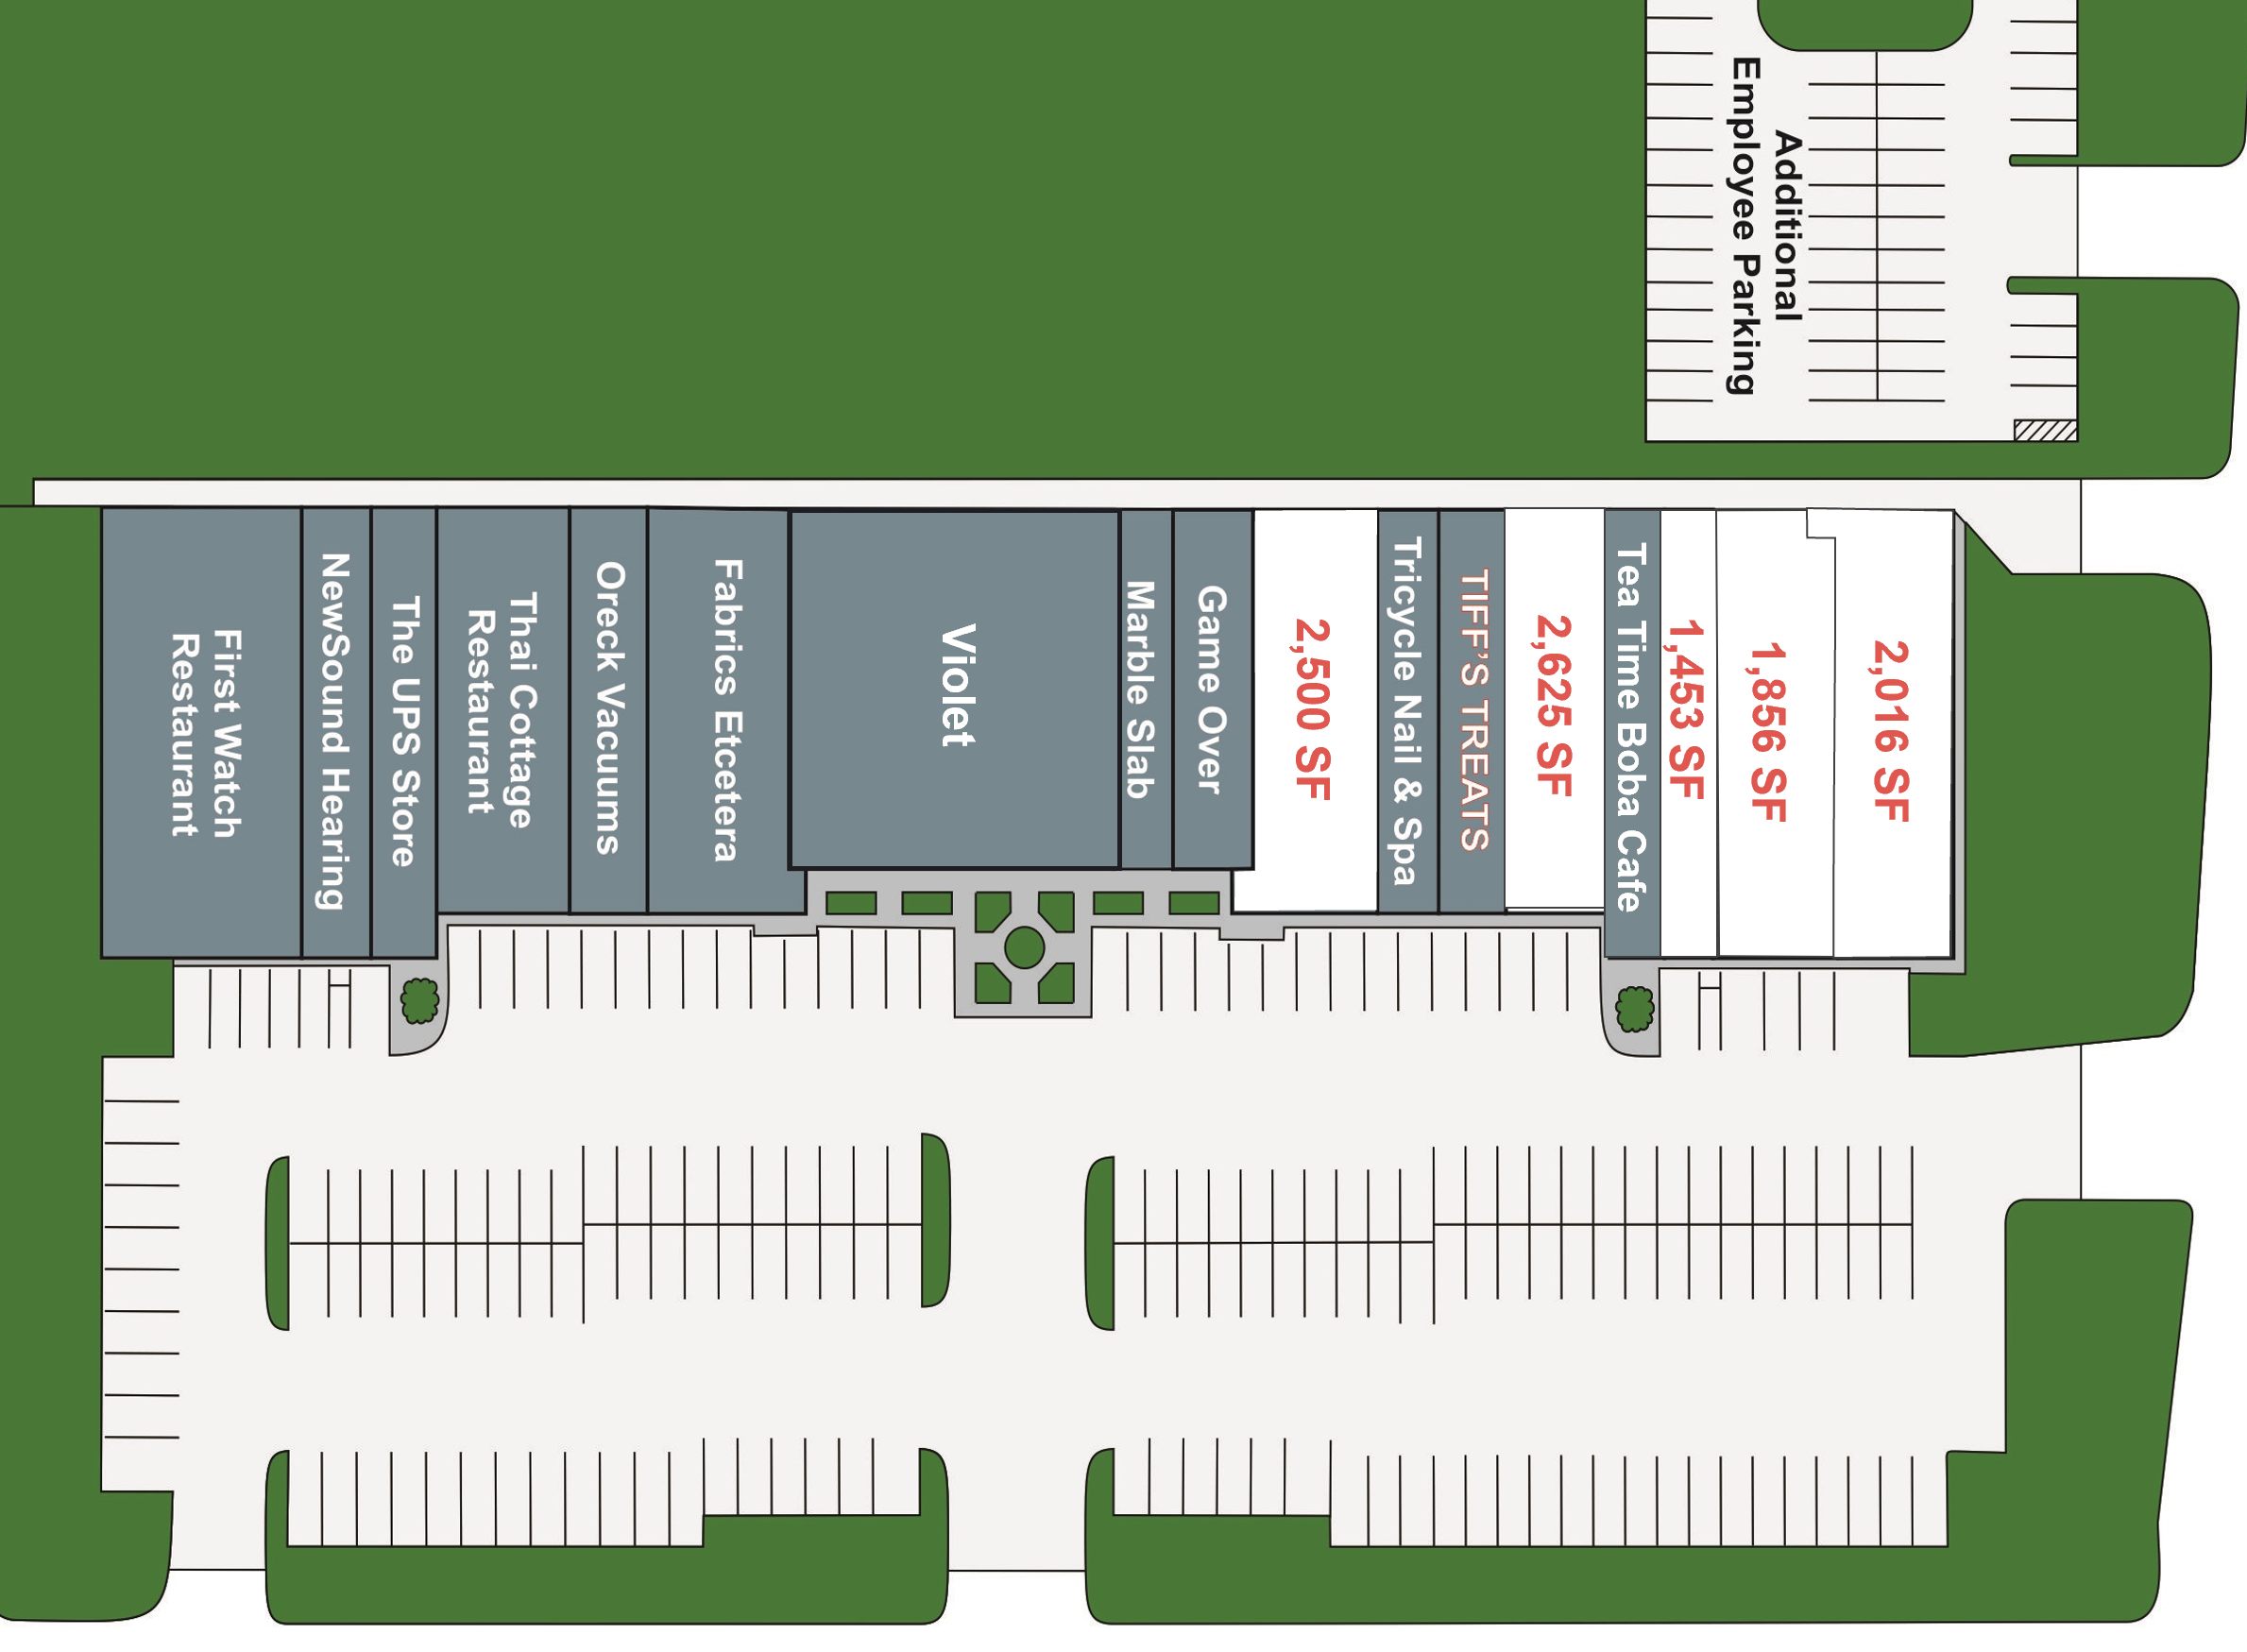 Boulevard Site Plan